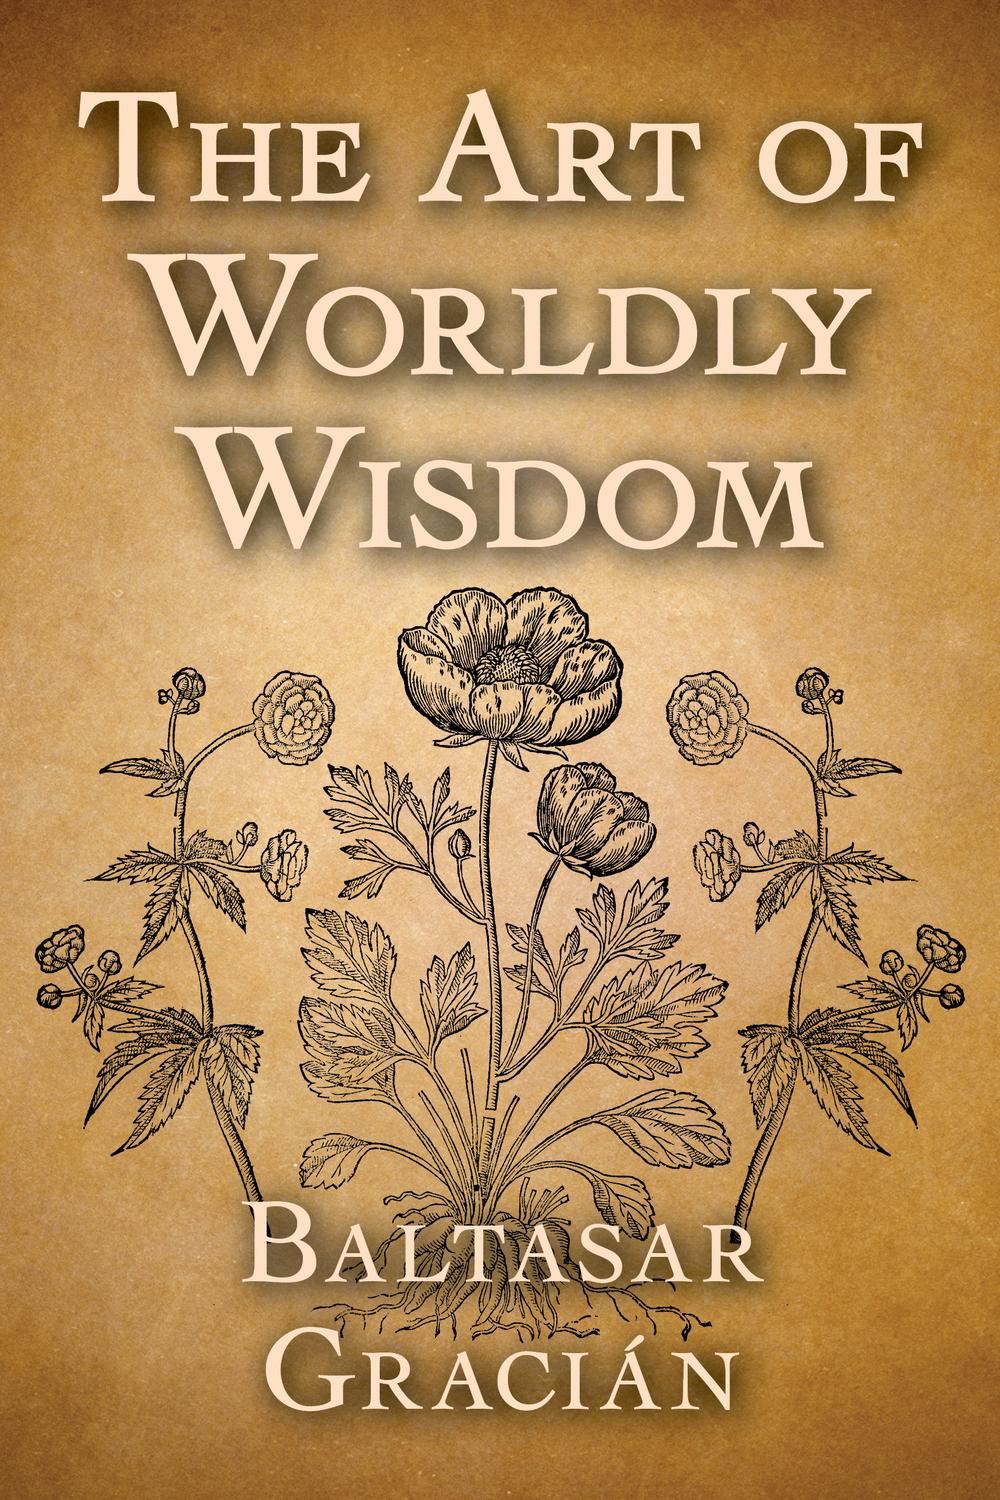 The Art of Worldly Wisdom - Baltasar Gracián